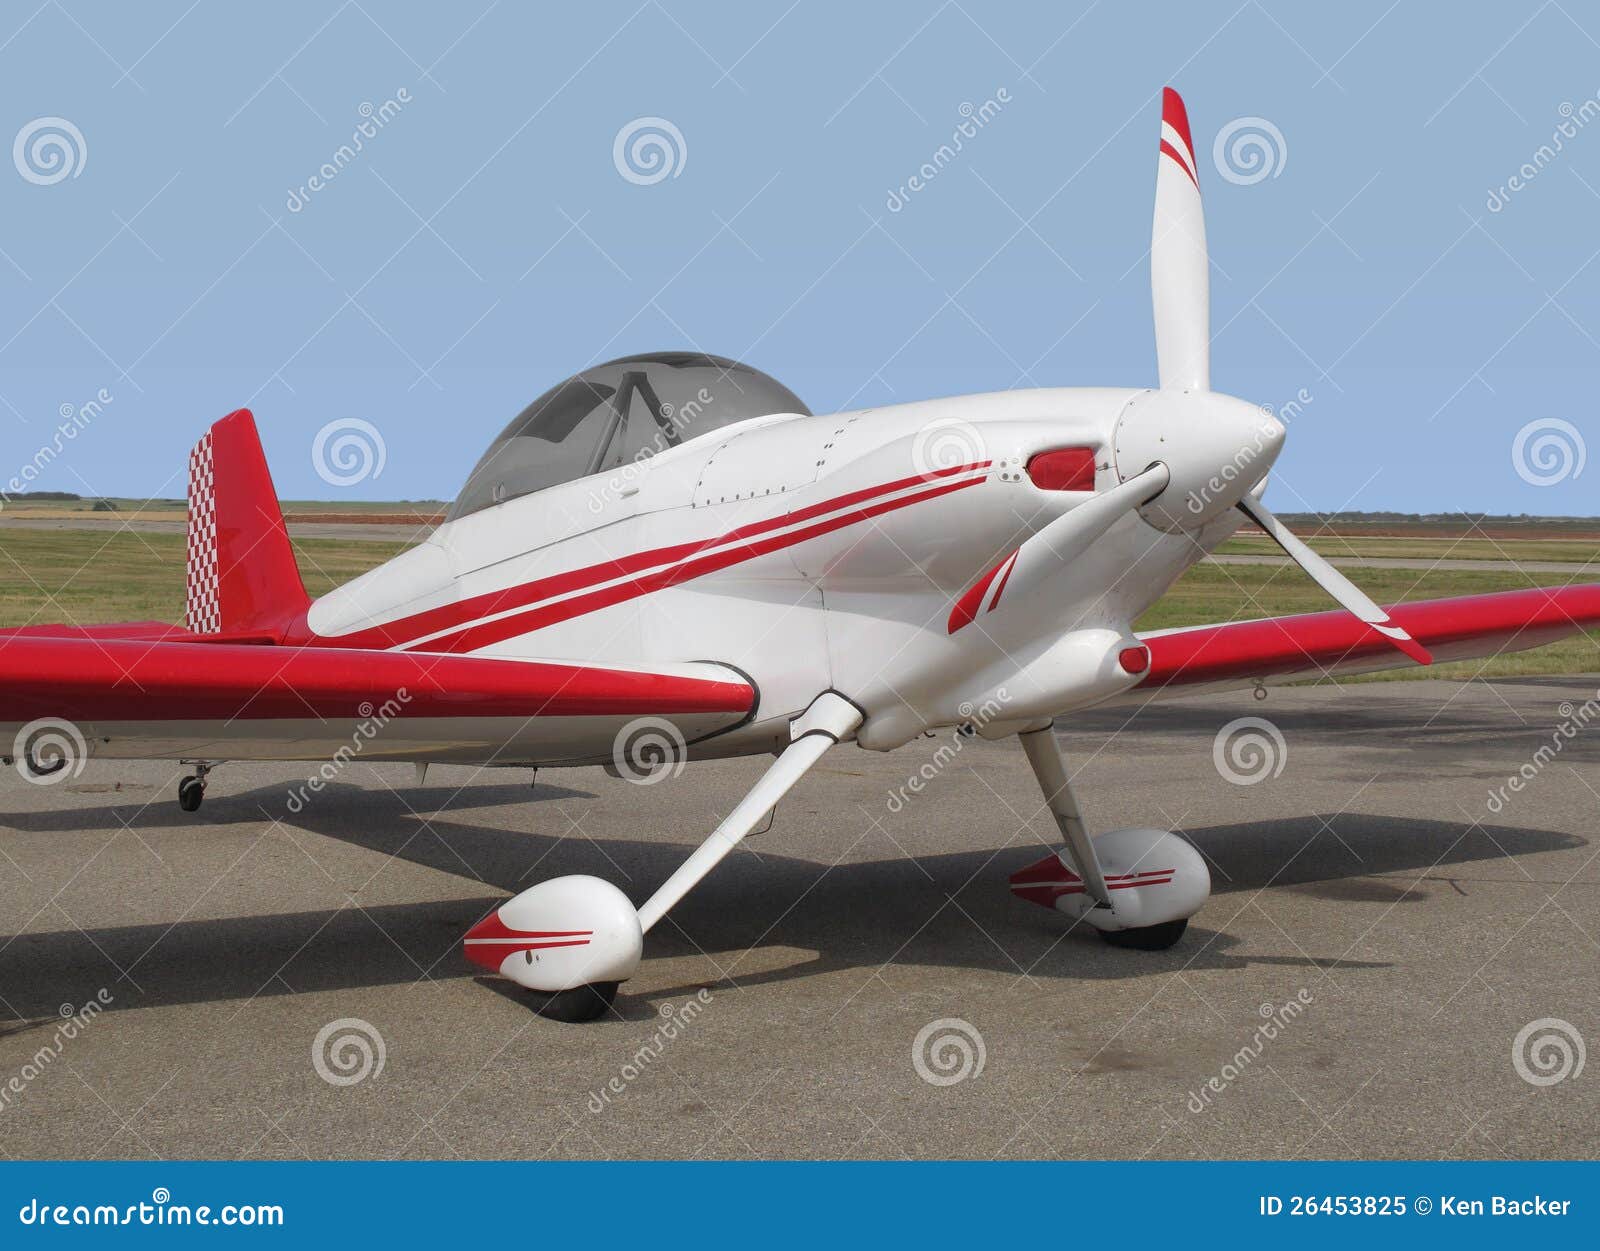 small sport aerobatic sport airplane.